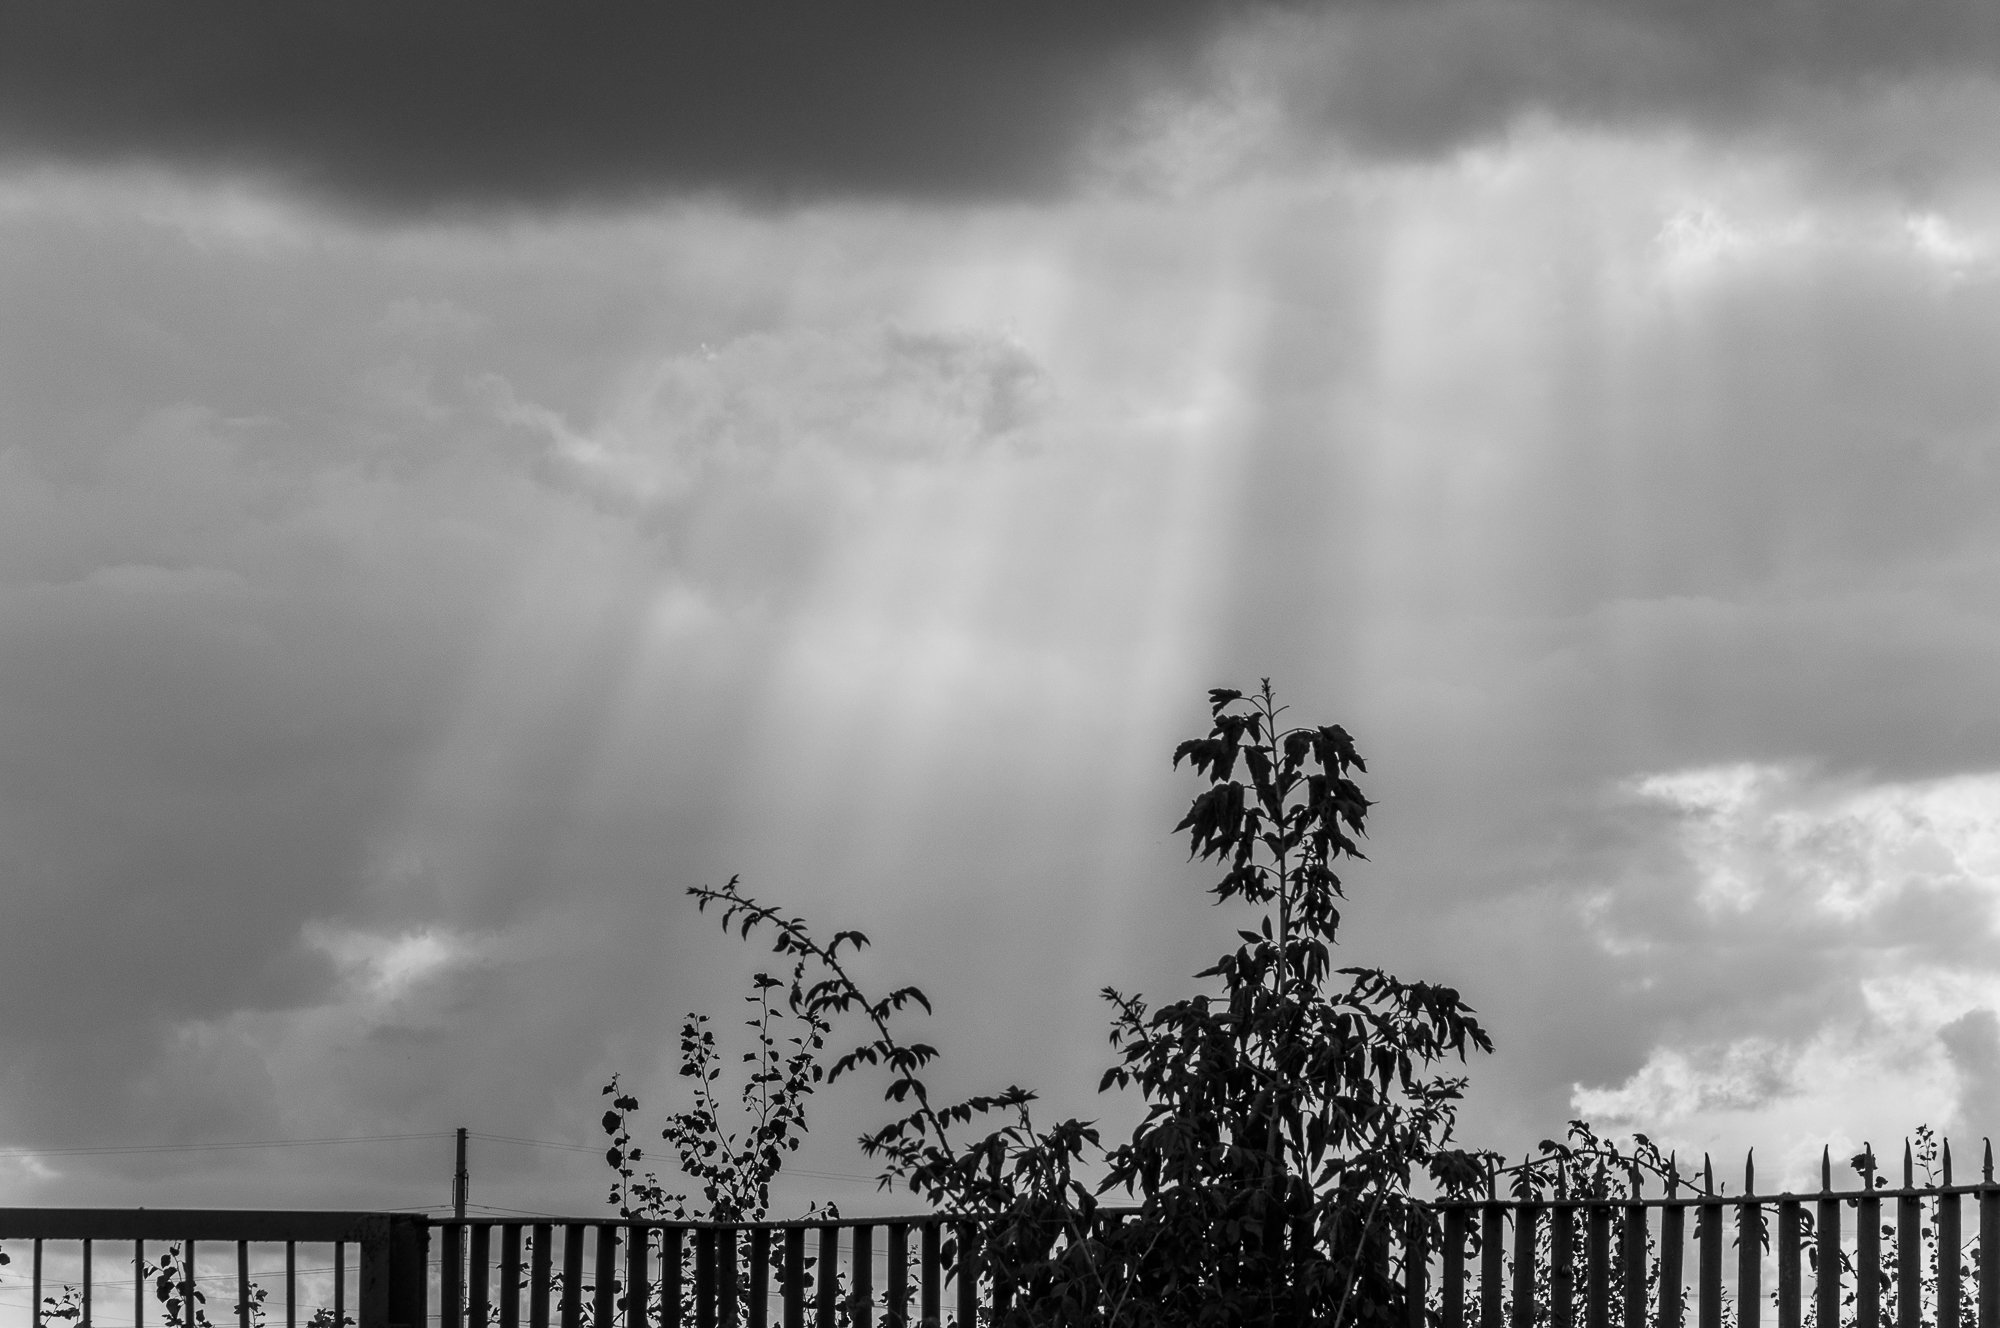 Adam Mazek Photography Warsaw 2020. Post: "Trivialities." Minimalism. Sun rays and clouds.